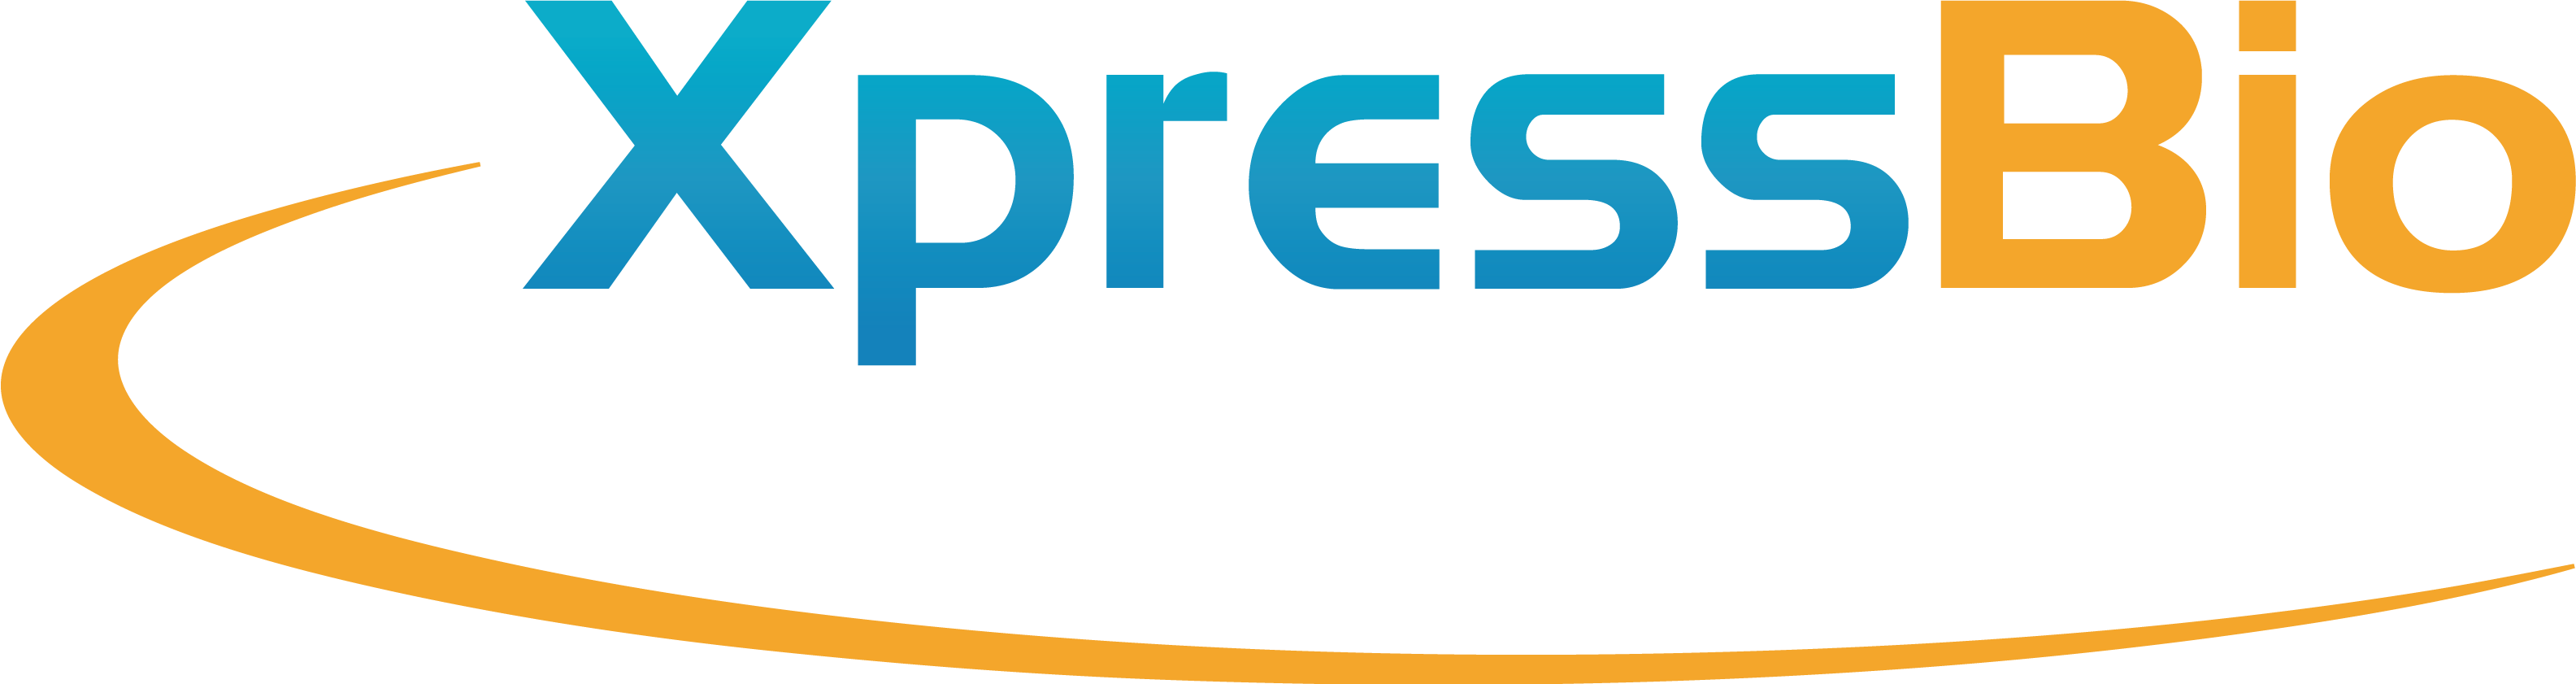 Xpress Biotech International